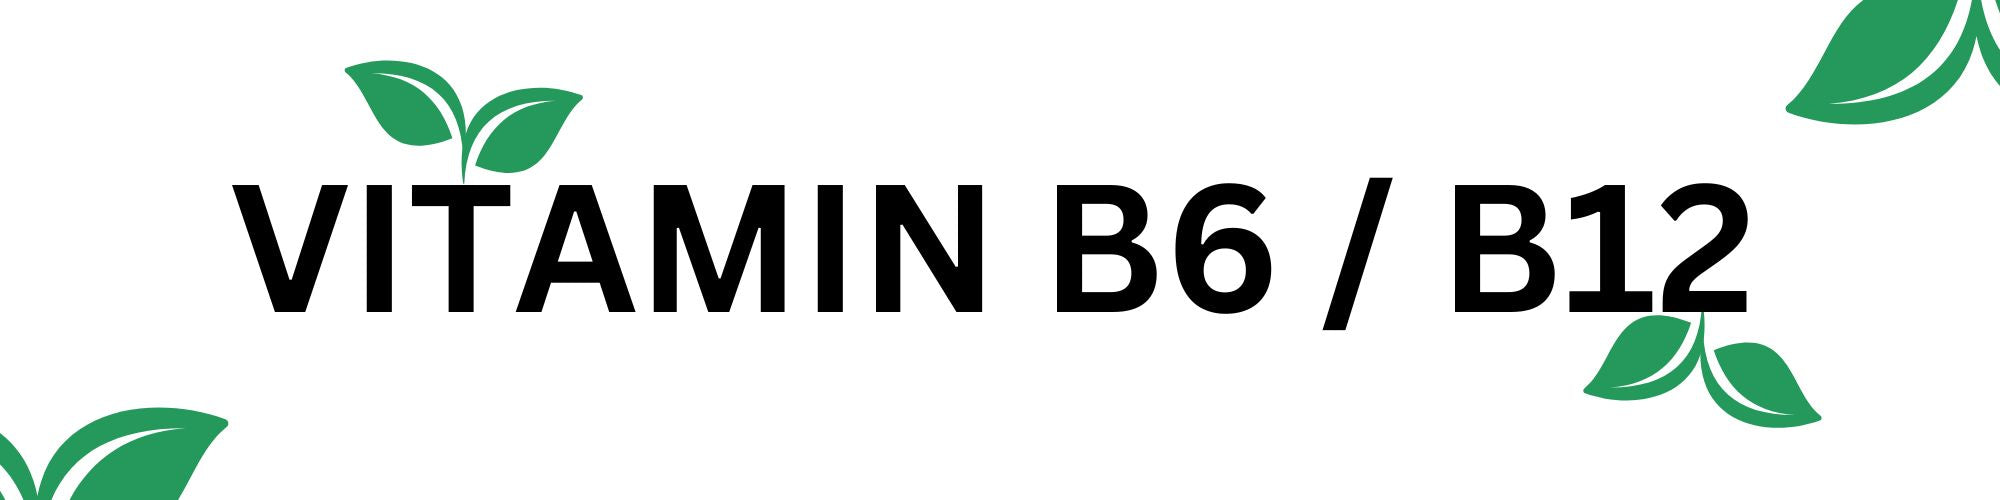 Vitamin B6 / B12 MyImpulse